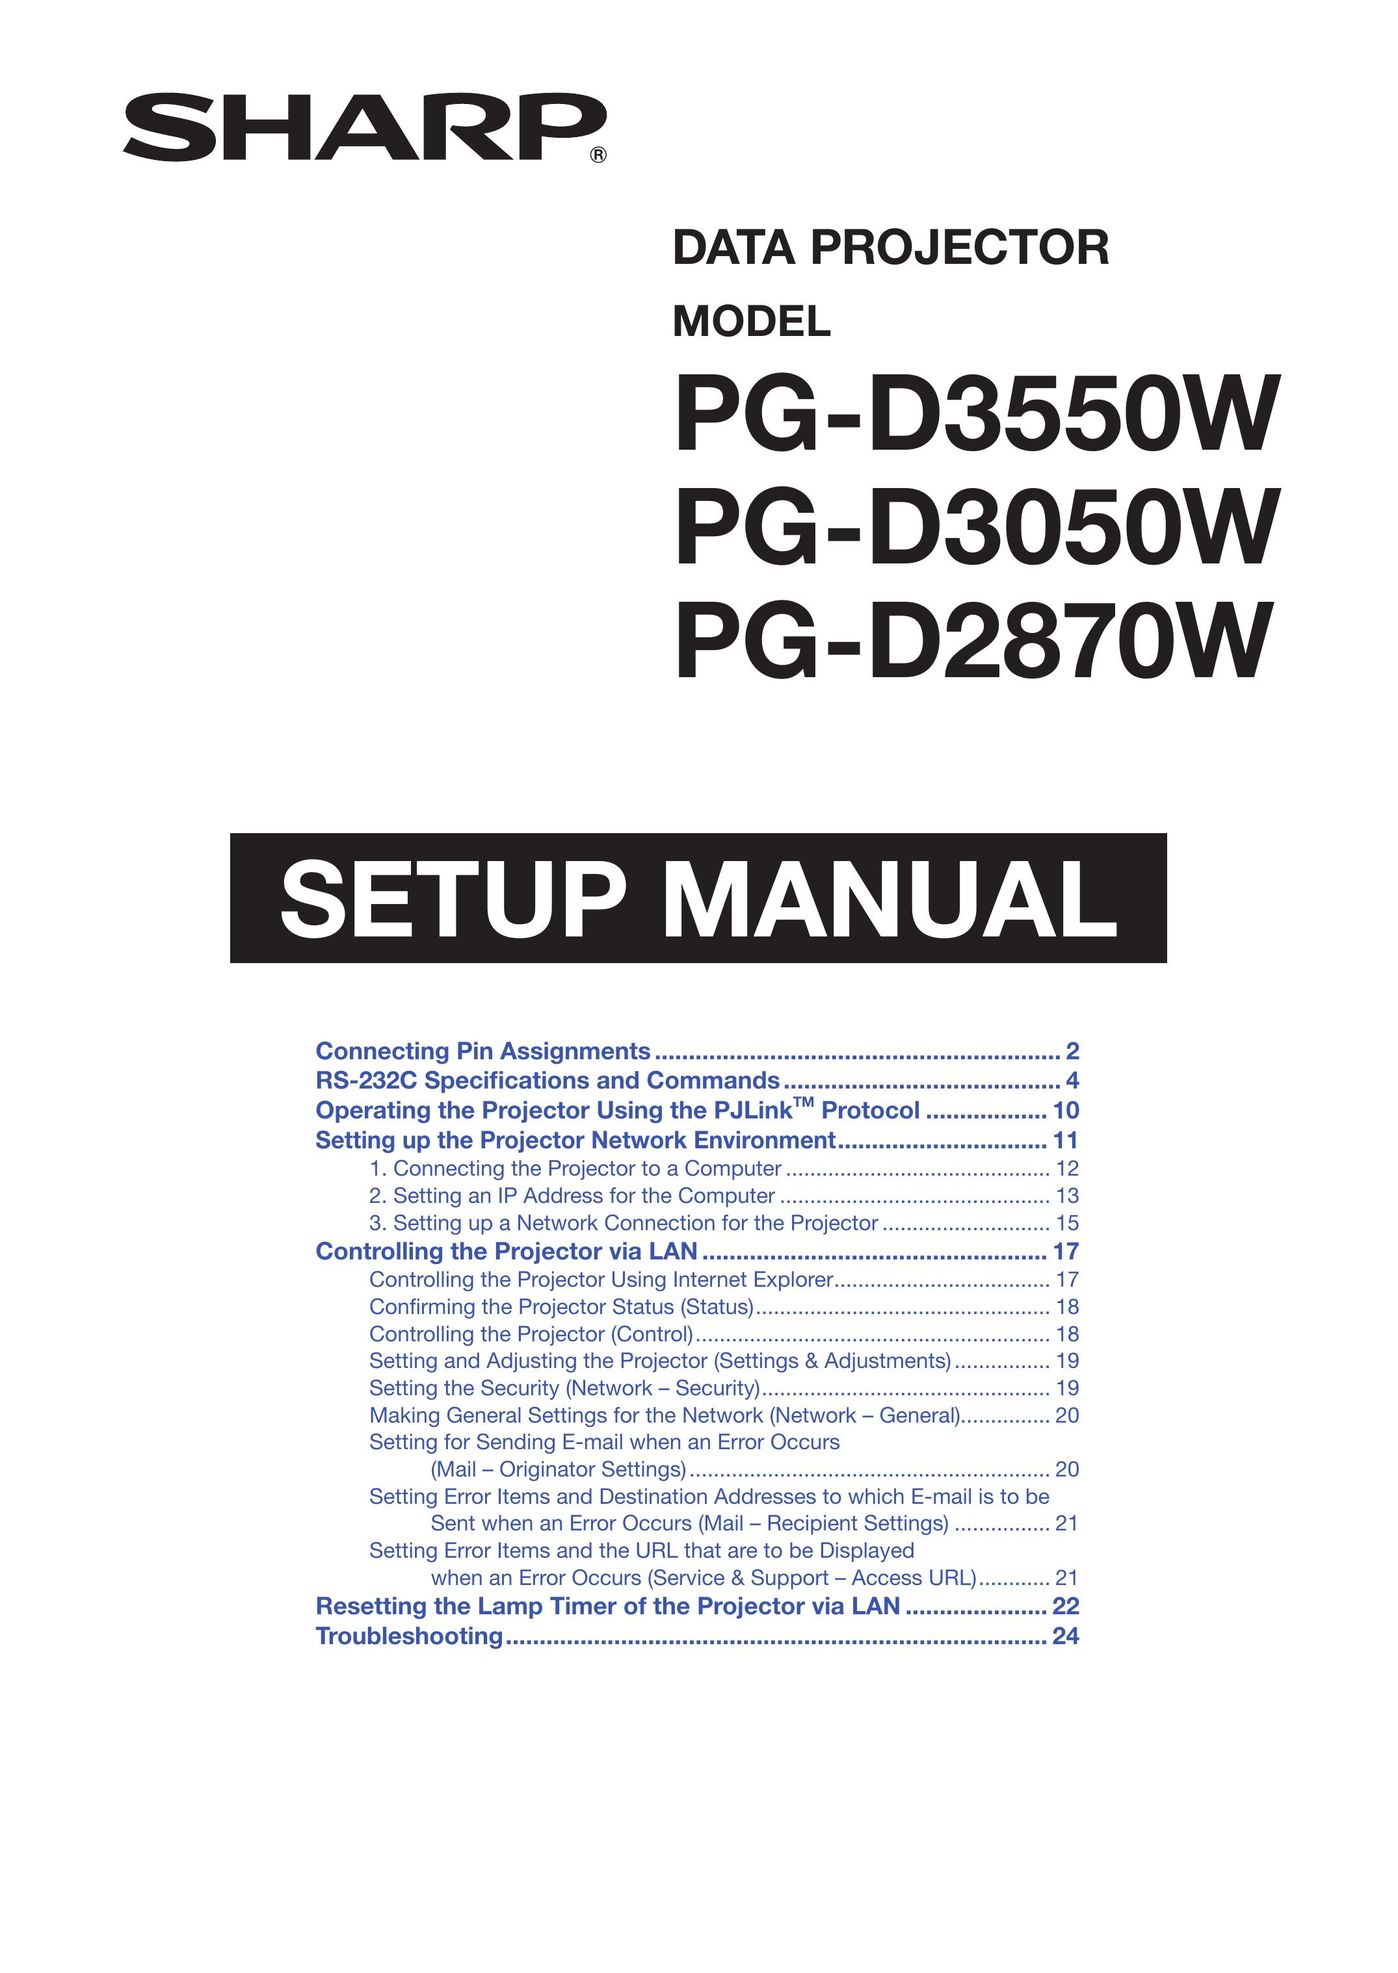 Sharp PG-D2870W Projector User Manual